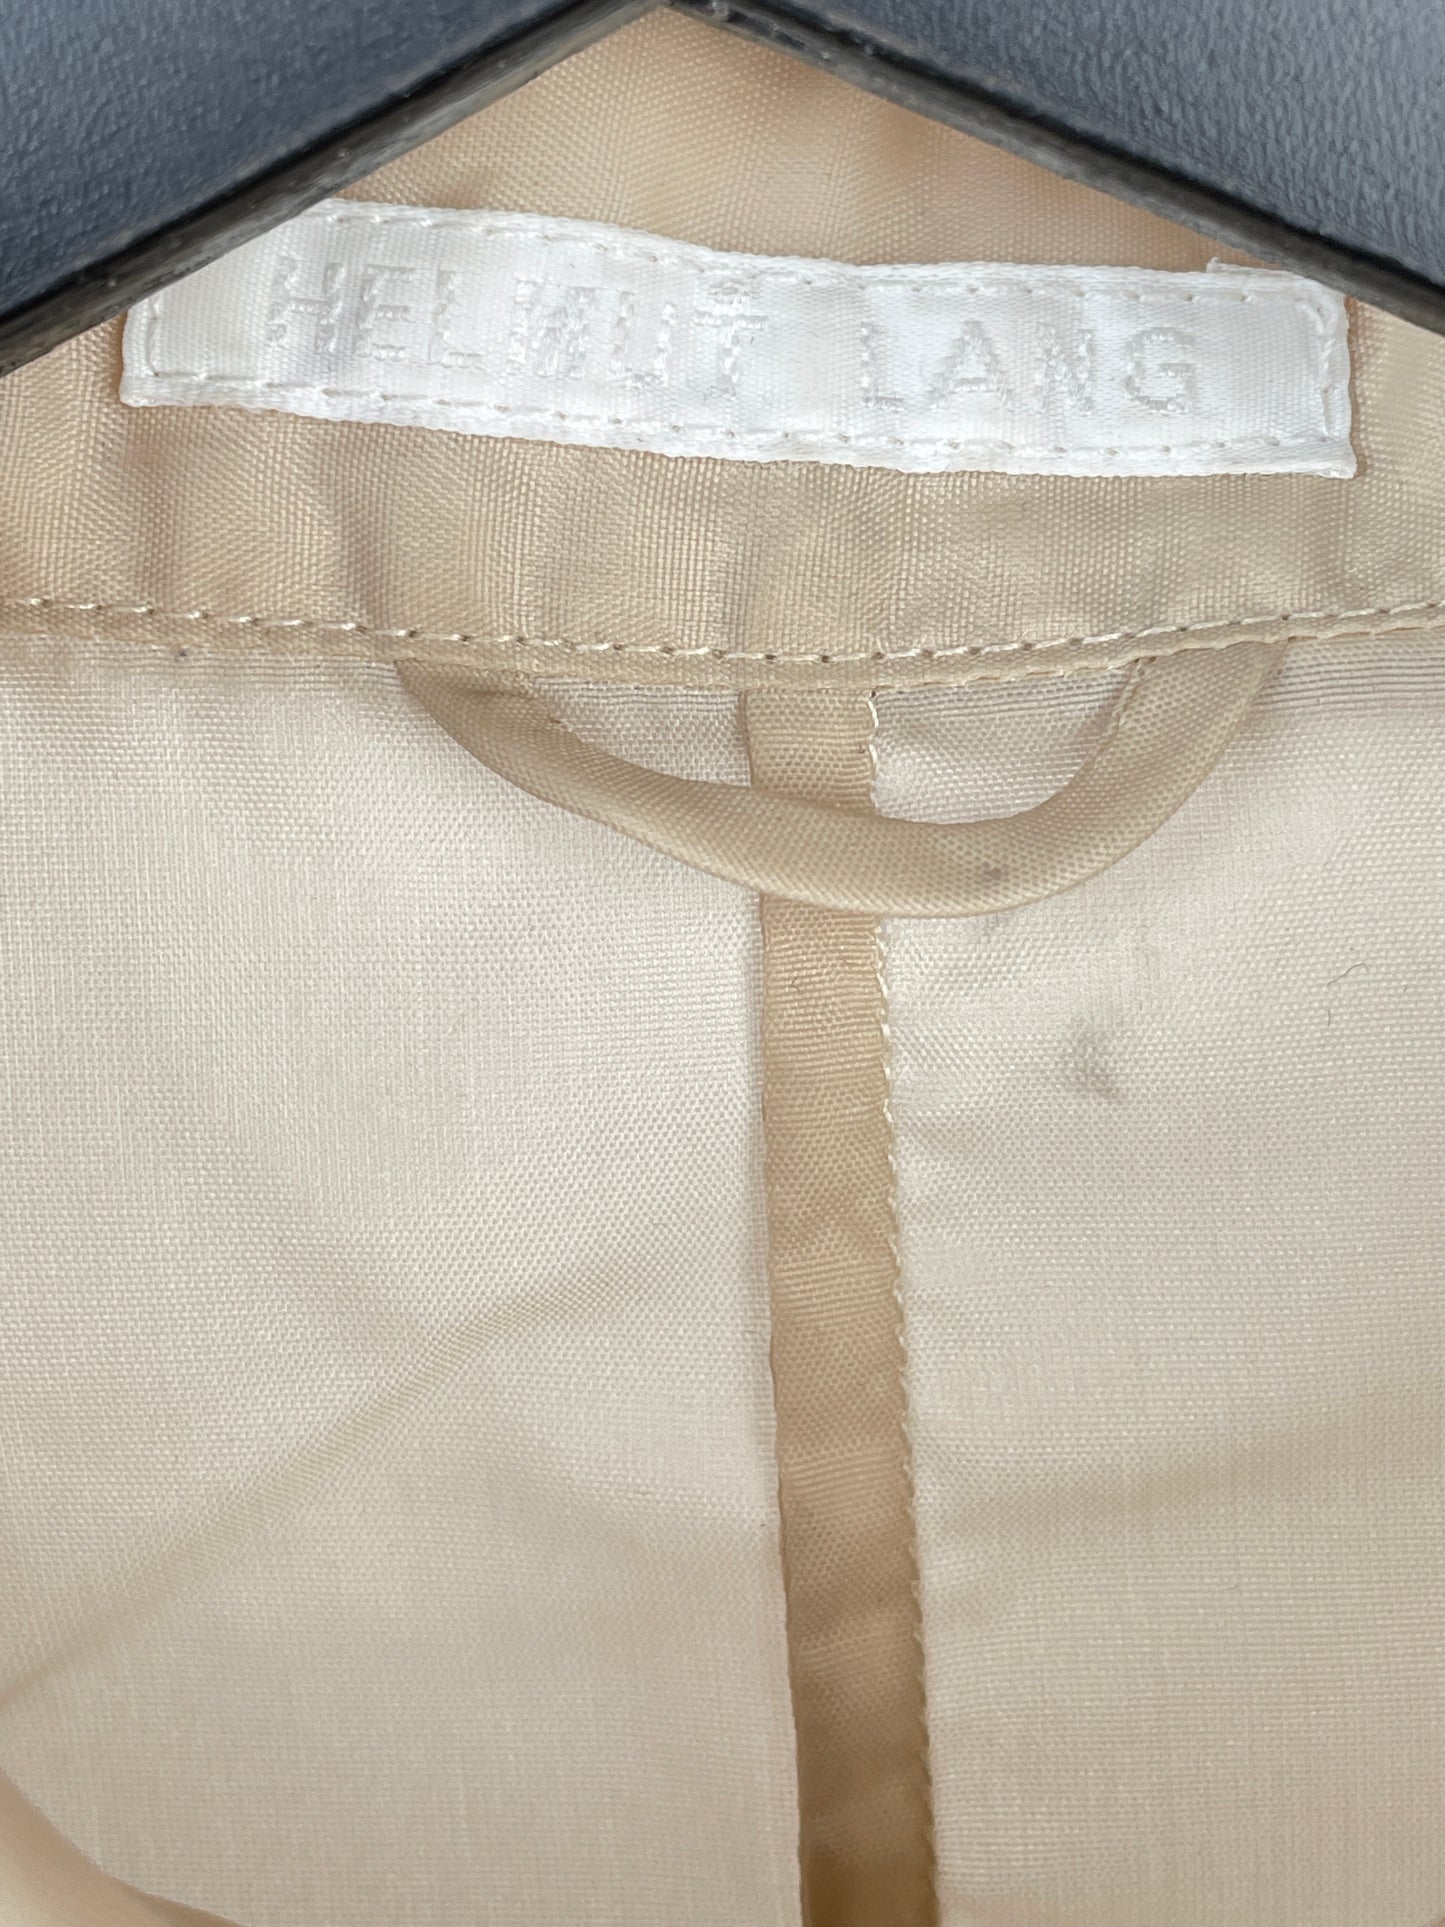 Helmut Lang SS97 Satin-Stripe Shirt Jacket